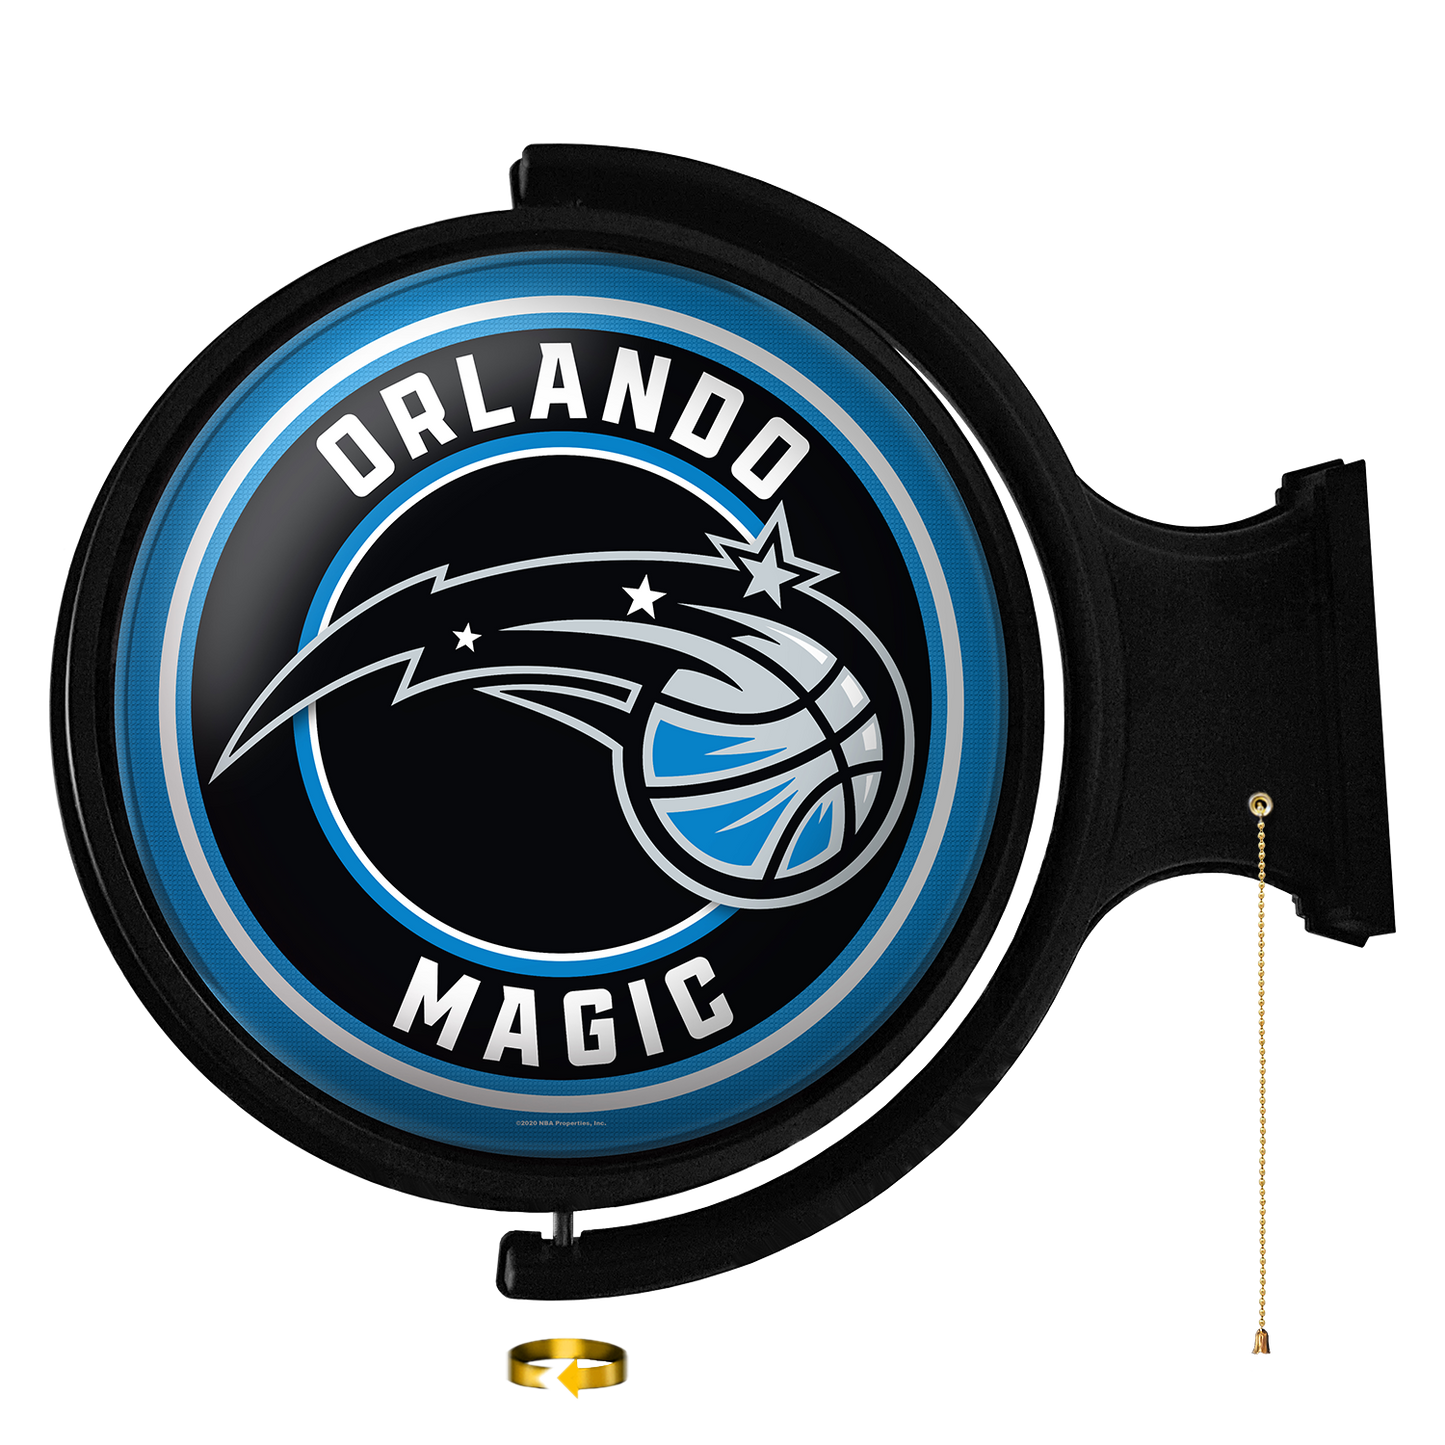 Orlando Magic: Original Round Rotating Lighted Wall Sign - The Fan-Brand